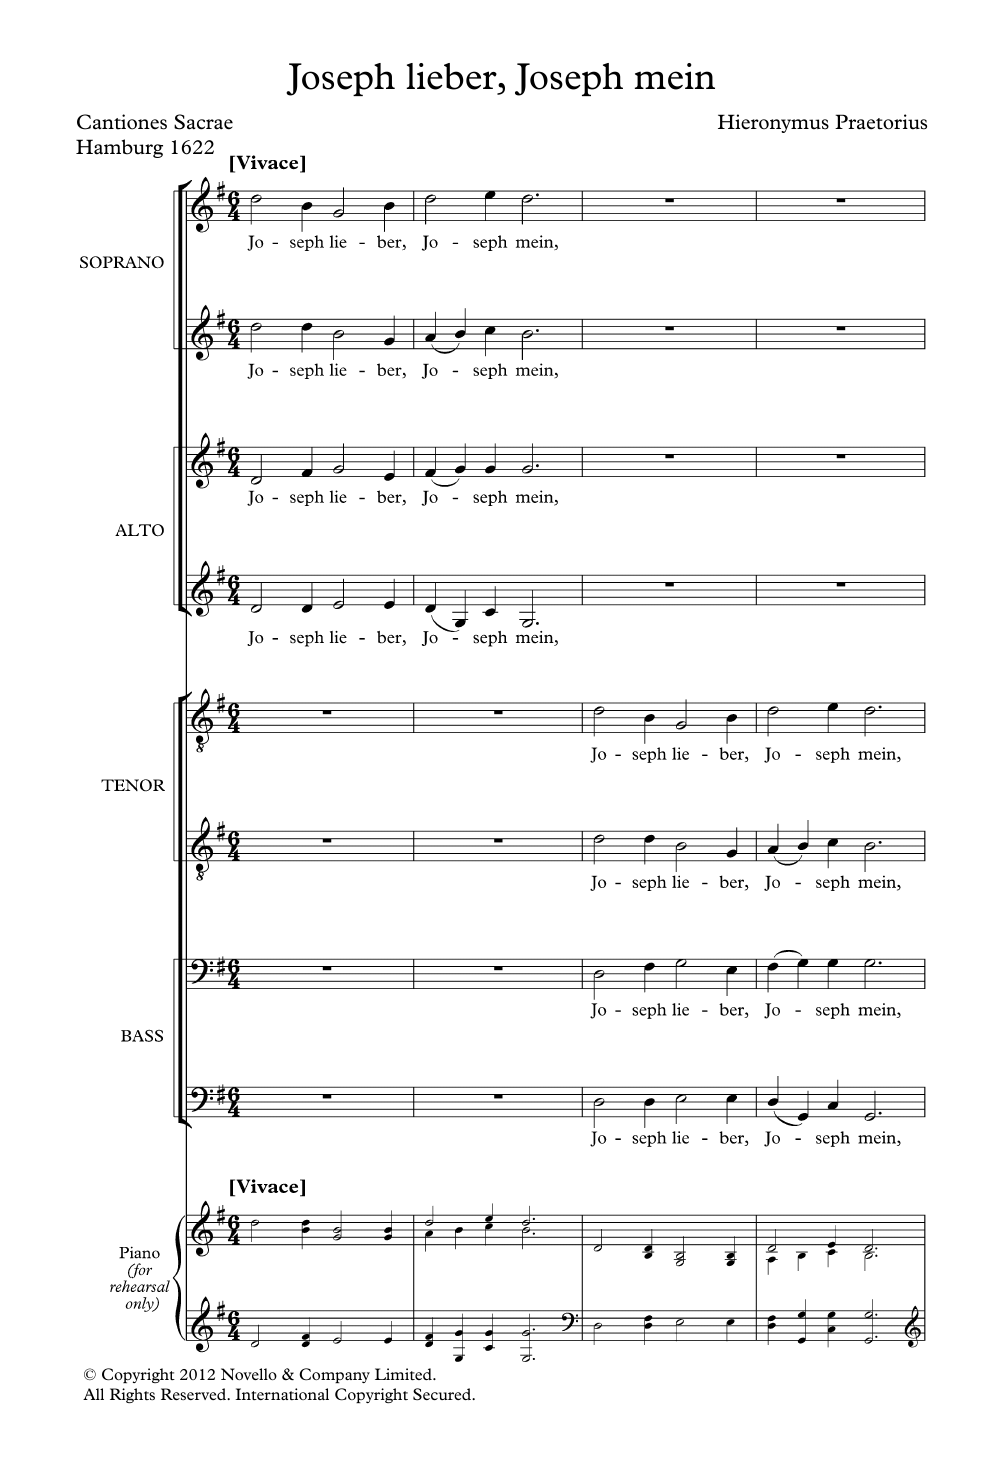 Hieronymus Praetorius Joseph, Lieber Joseph Mein sheet music notes and chords arranged for Choir